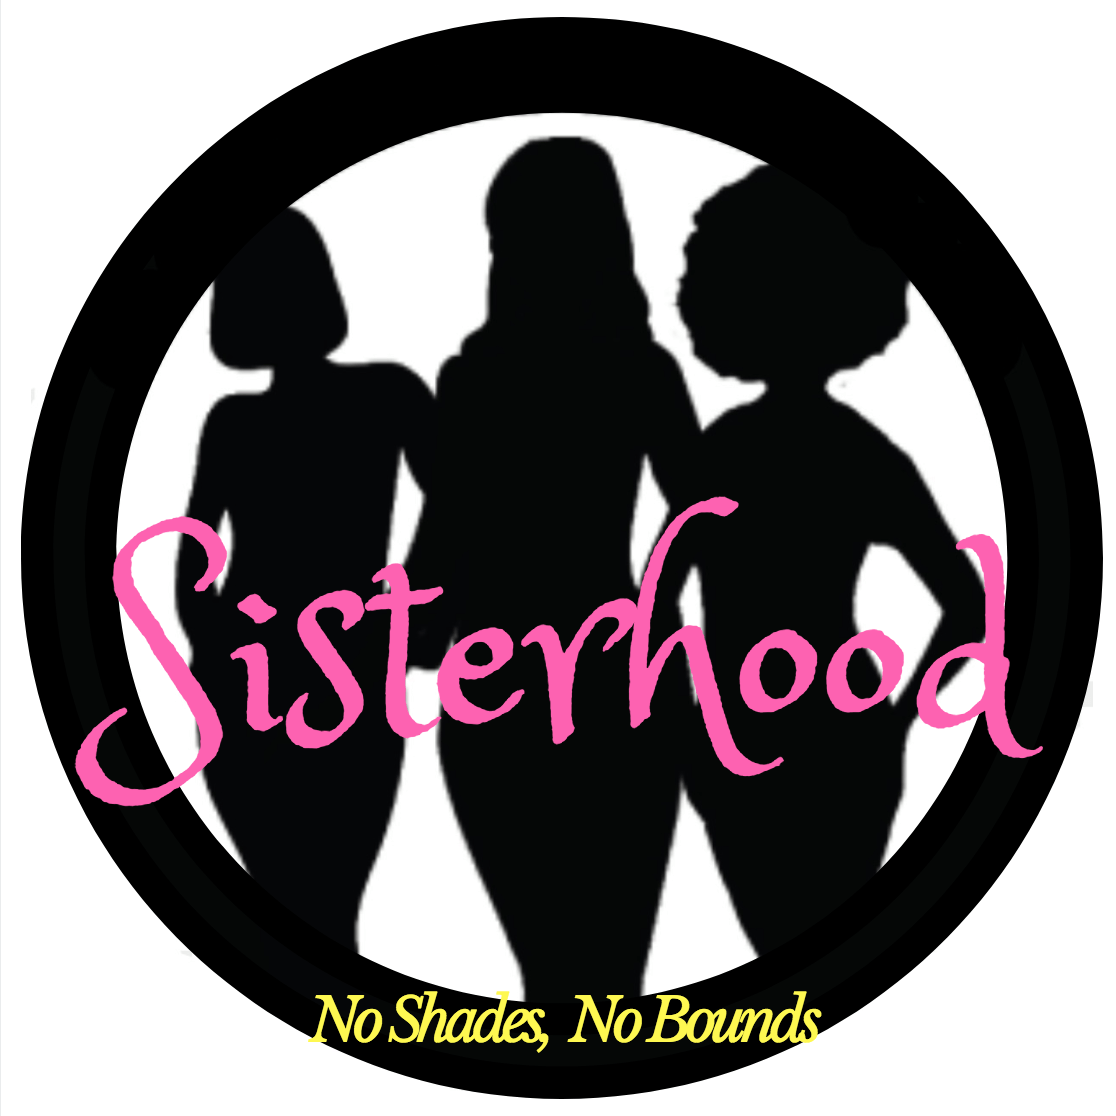 Sisterhood Logo - Sisterhood - Women's Center University of Wisconsin Oshkosh